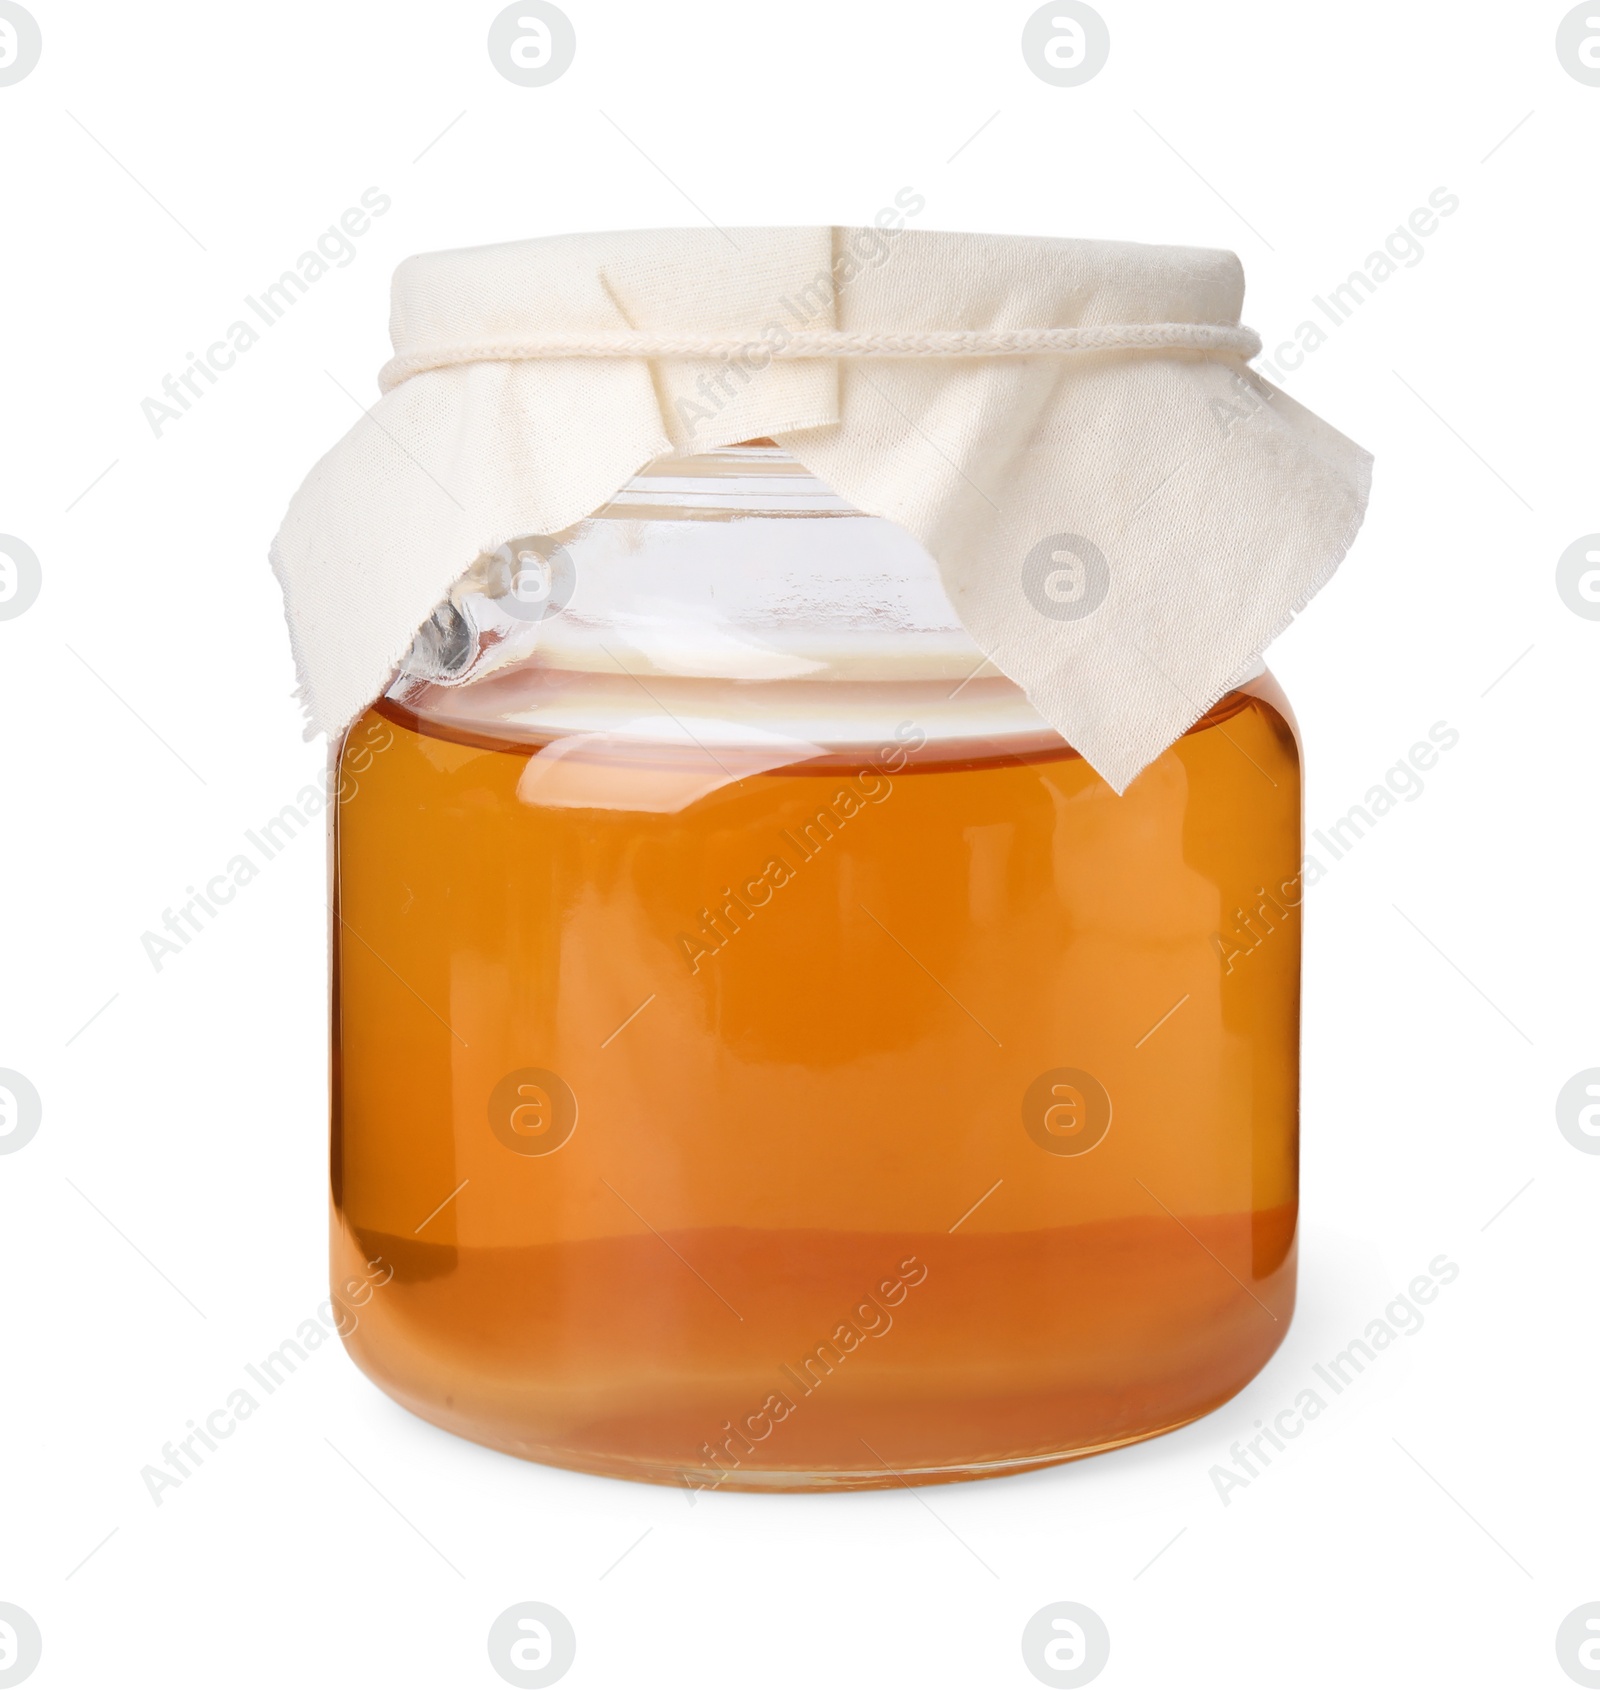 Photo of Tasty kombucha in glass jar isolated on white